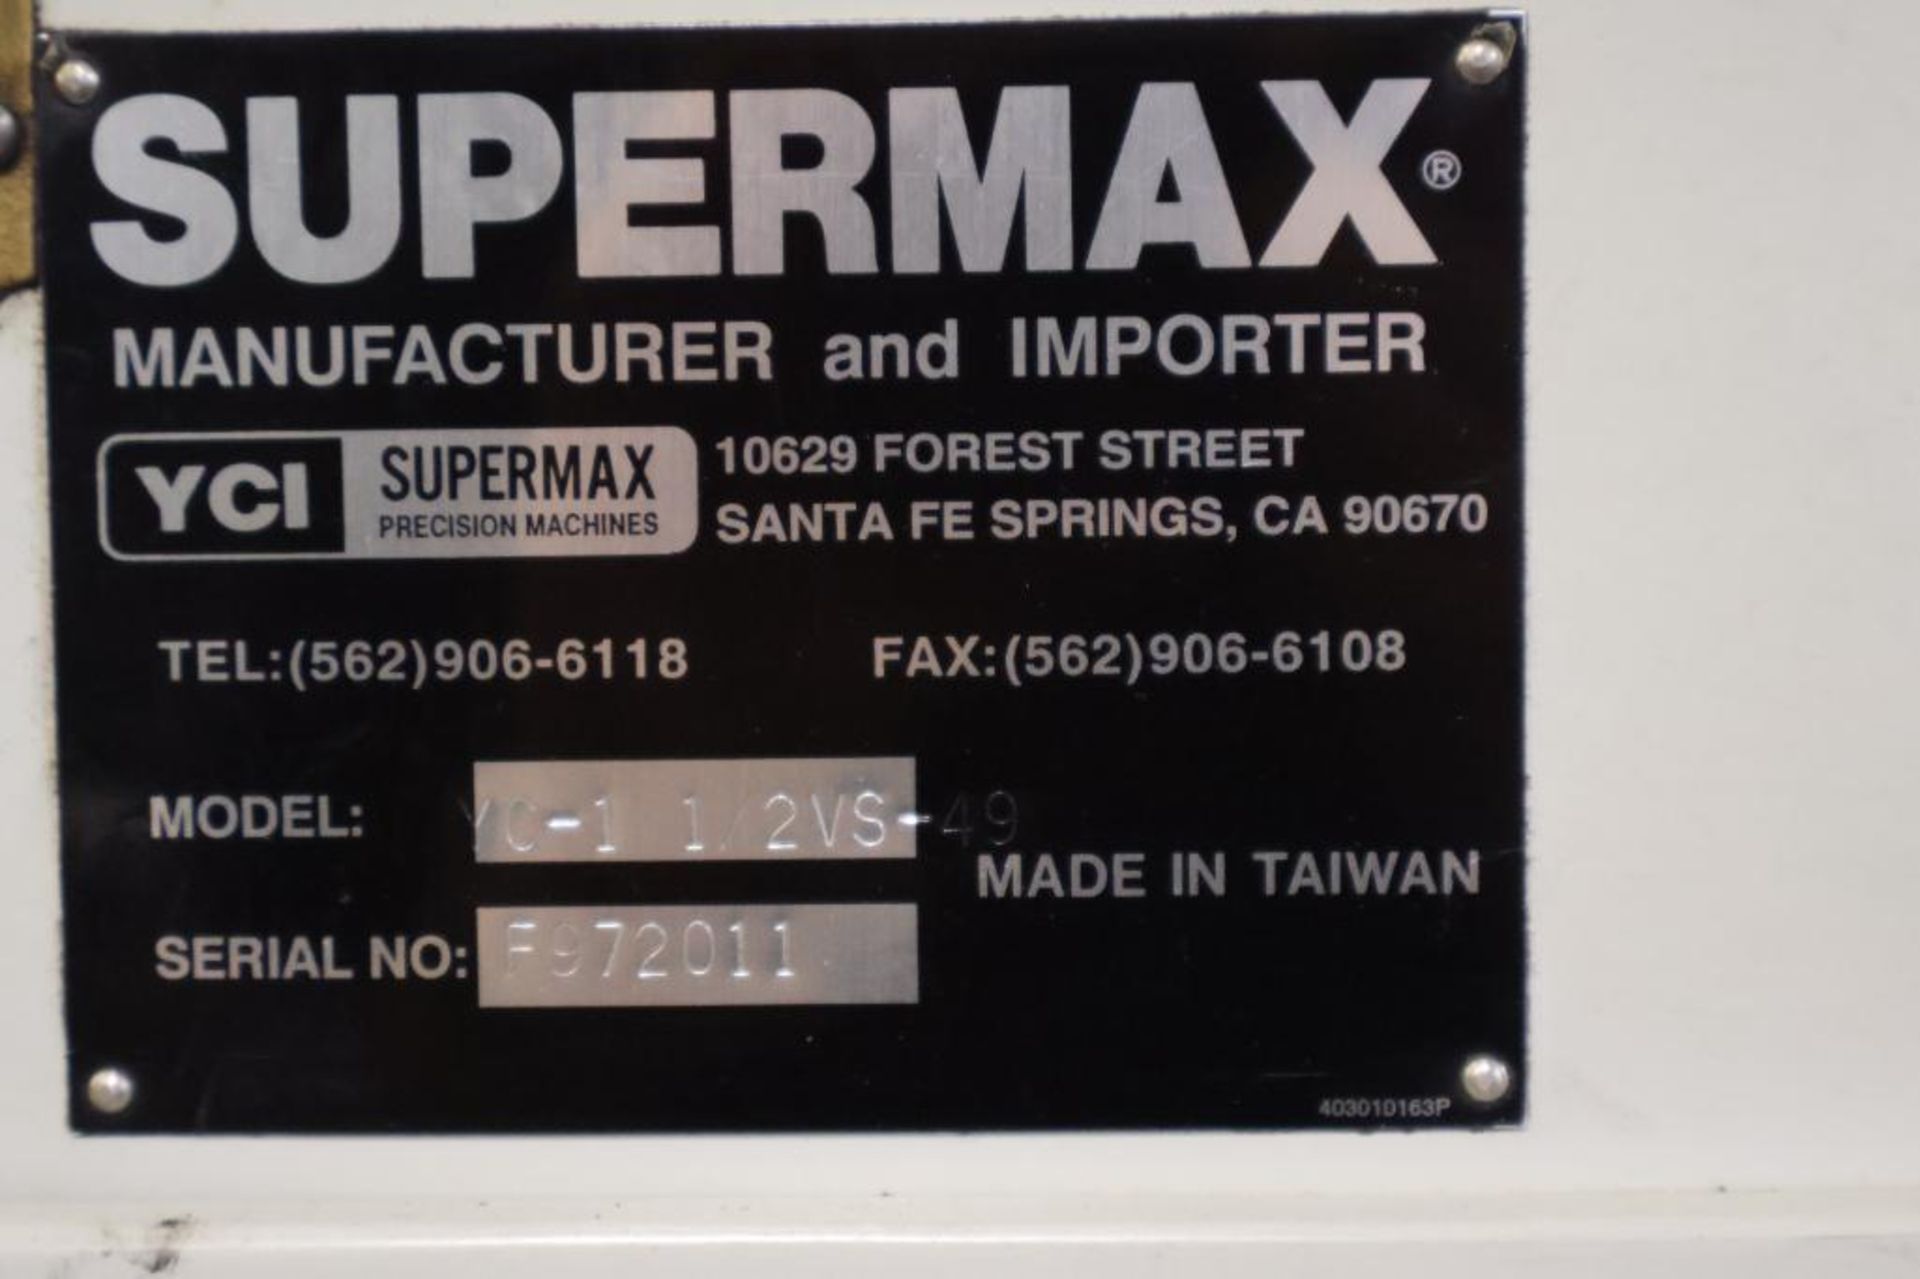 Supermax YC-1-1/2 VS vertical milling machine - Bild 17 aus 17